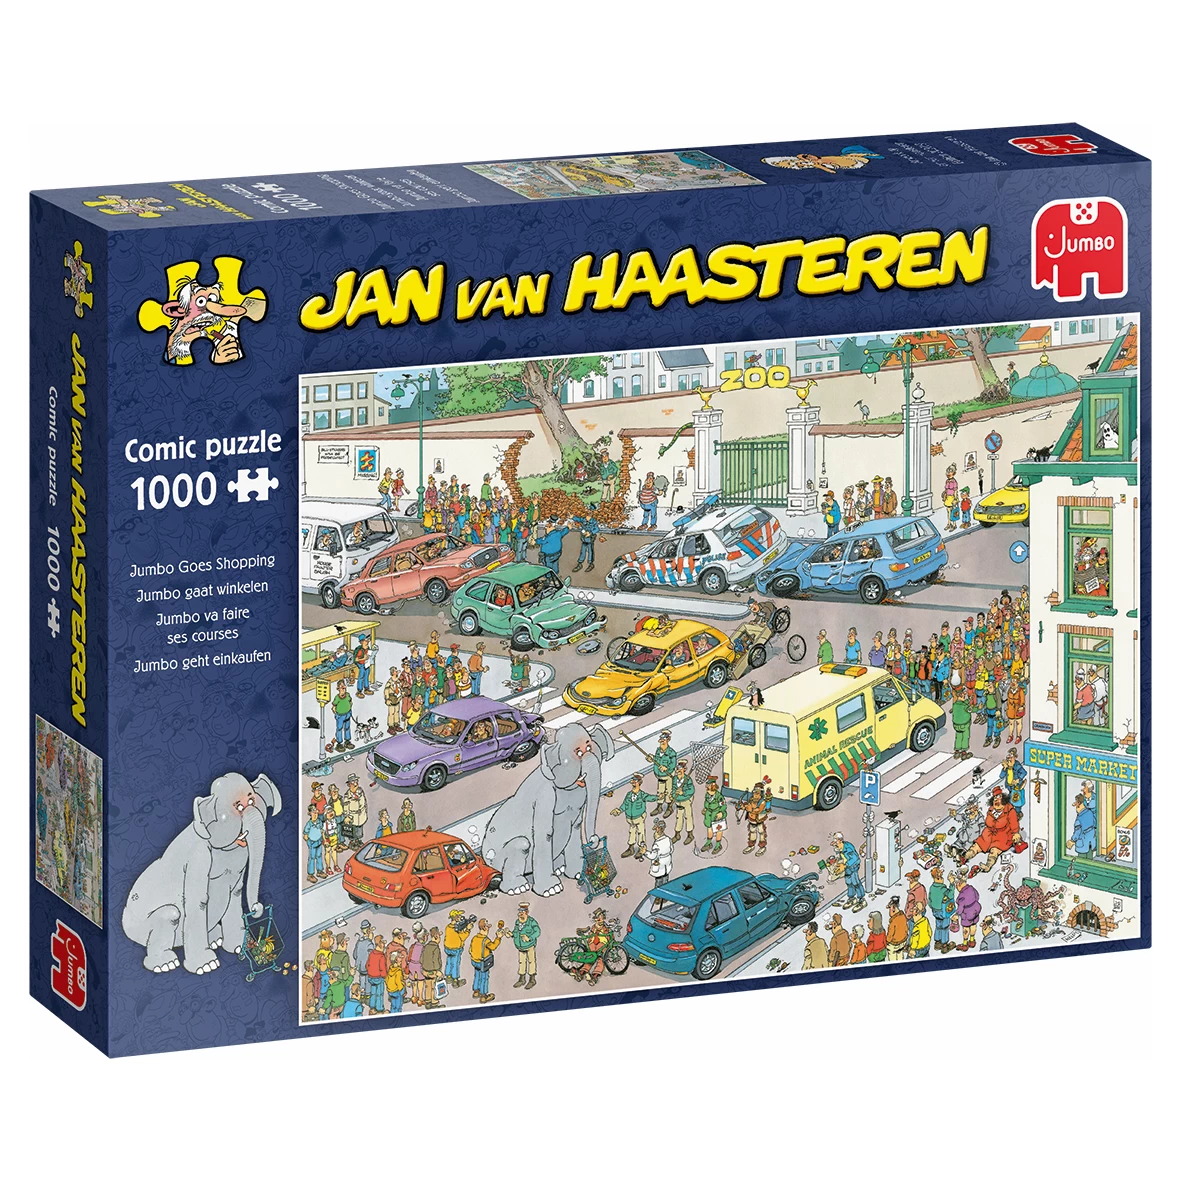 Puzzle - Jumbo geht einkaufen (van Haasteren) - 1000 Teile